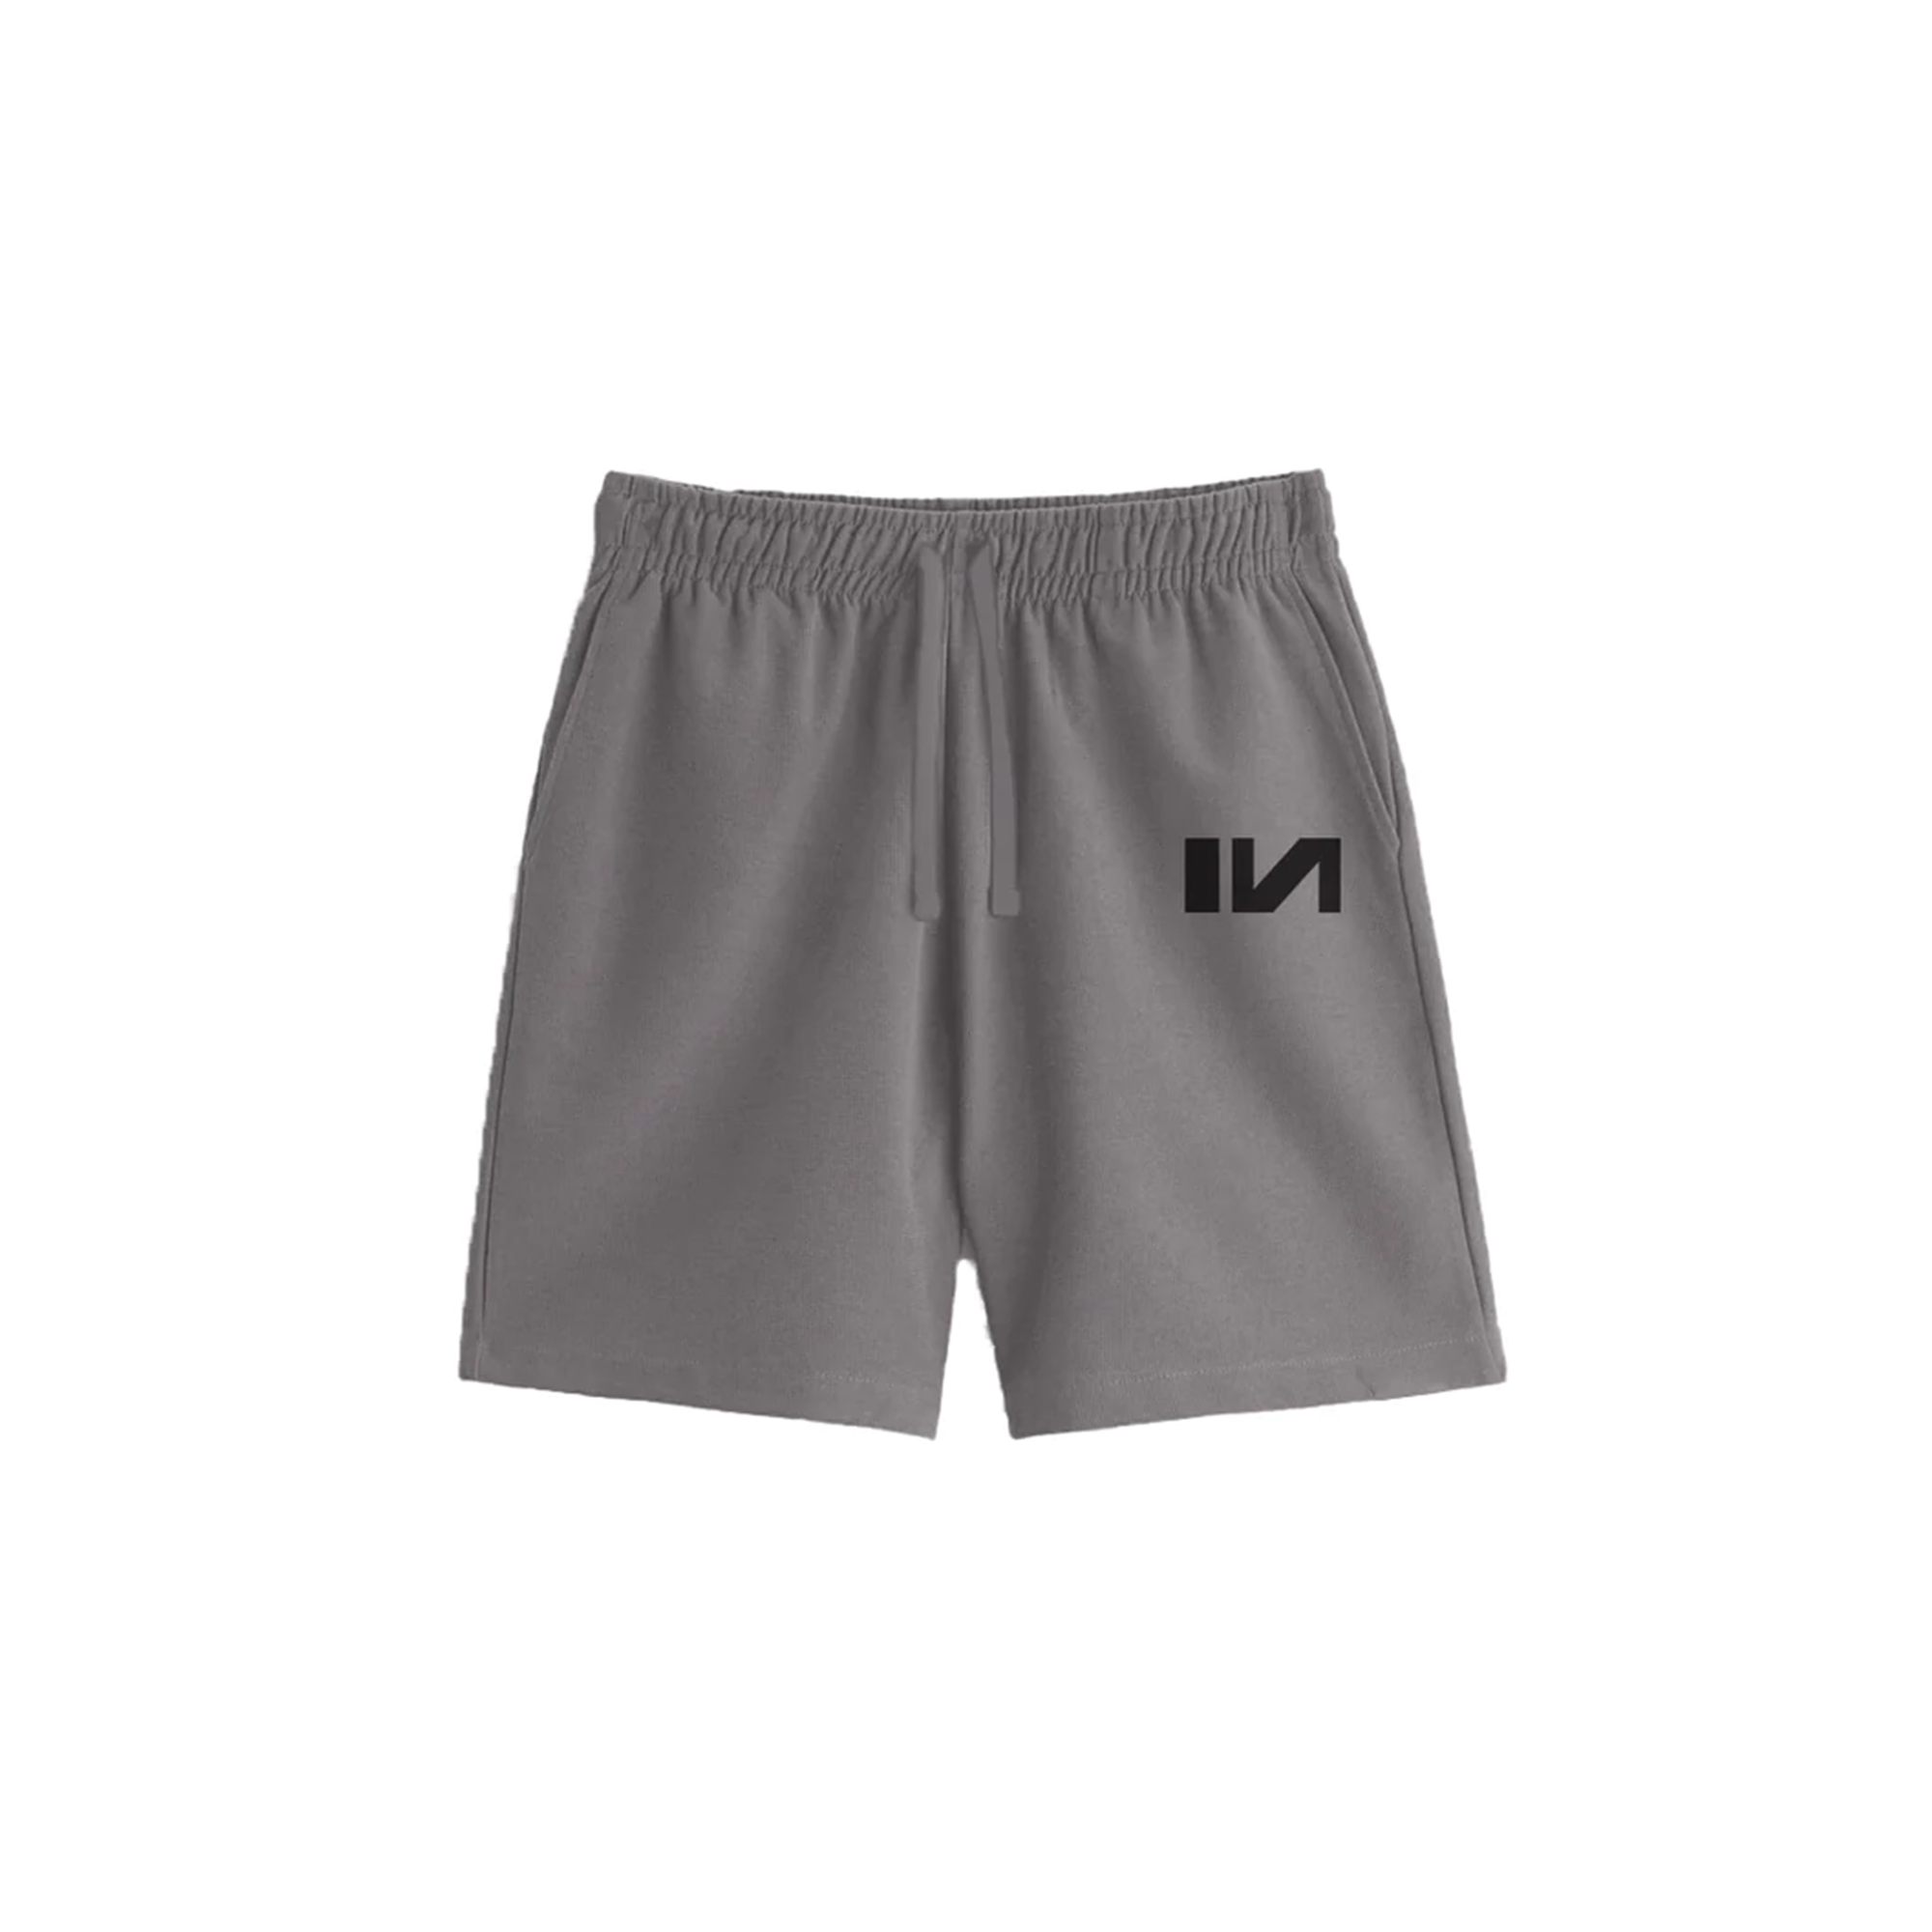 Shorts - Steel Grey